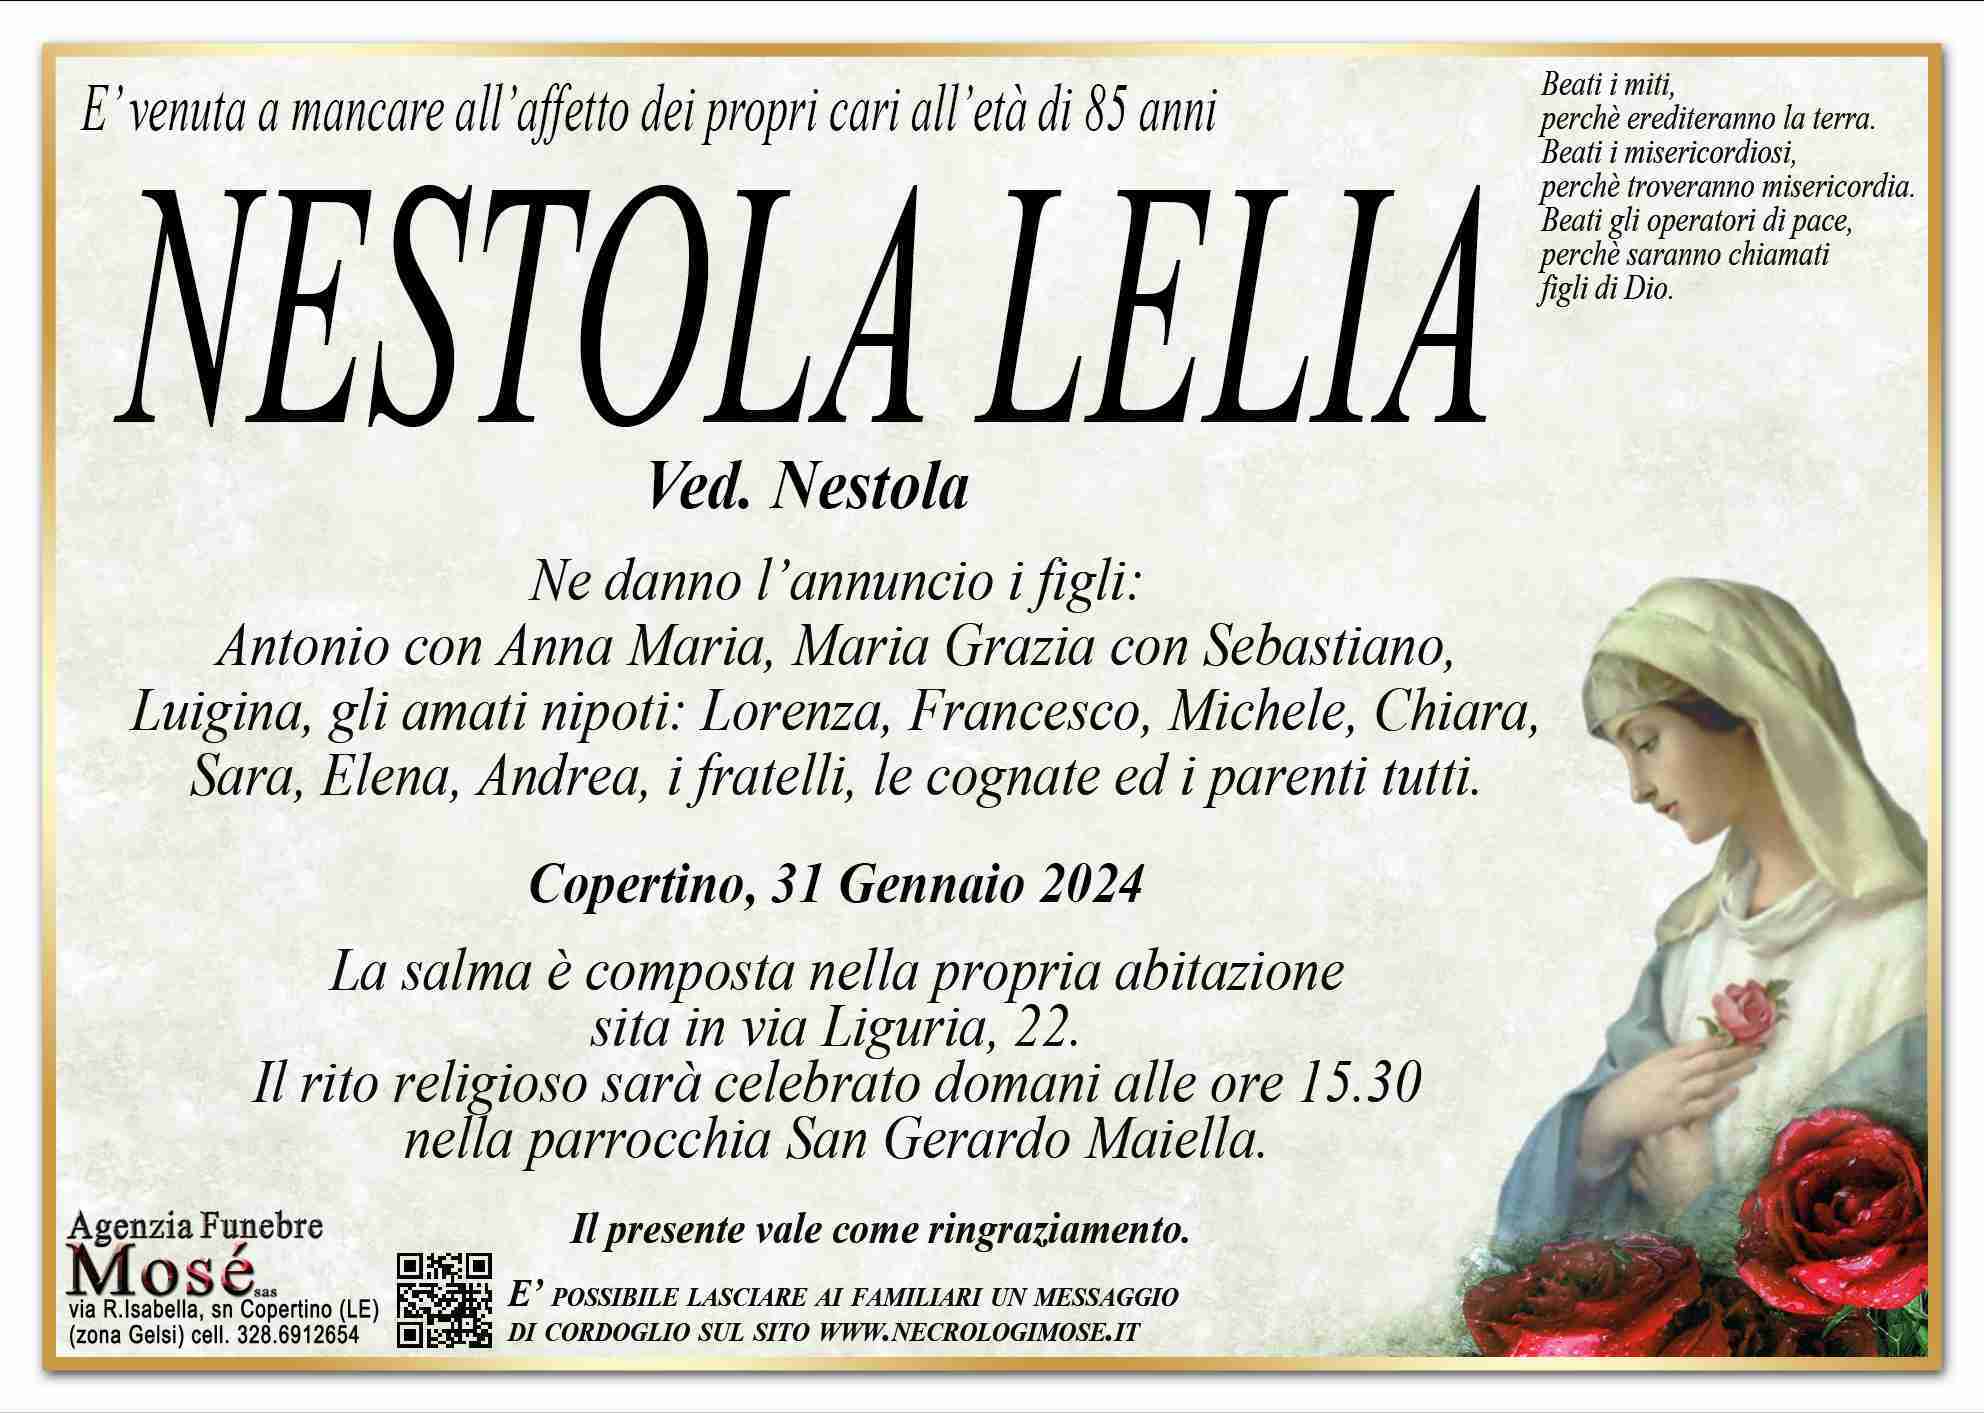 Nestola Lelia